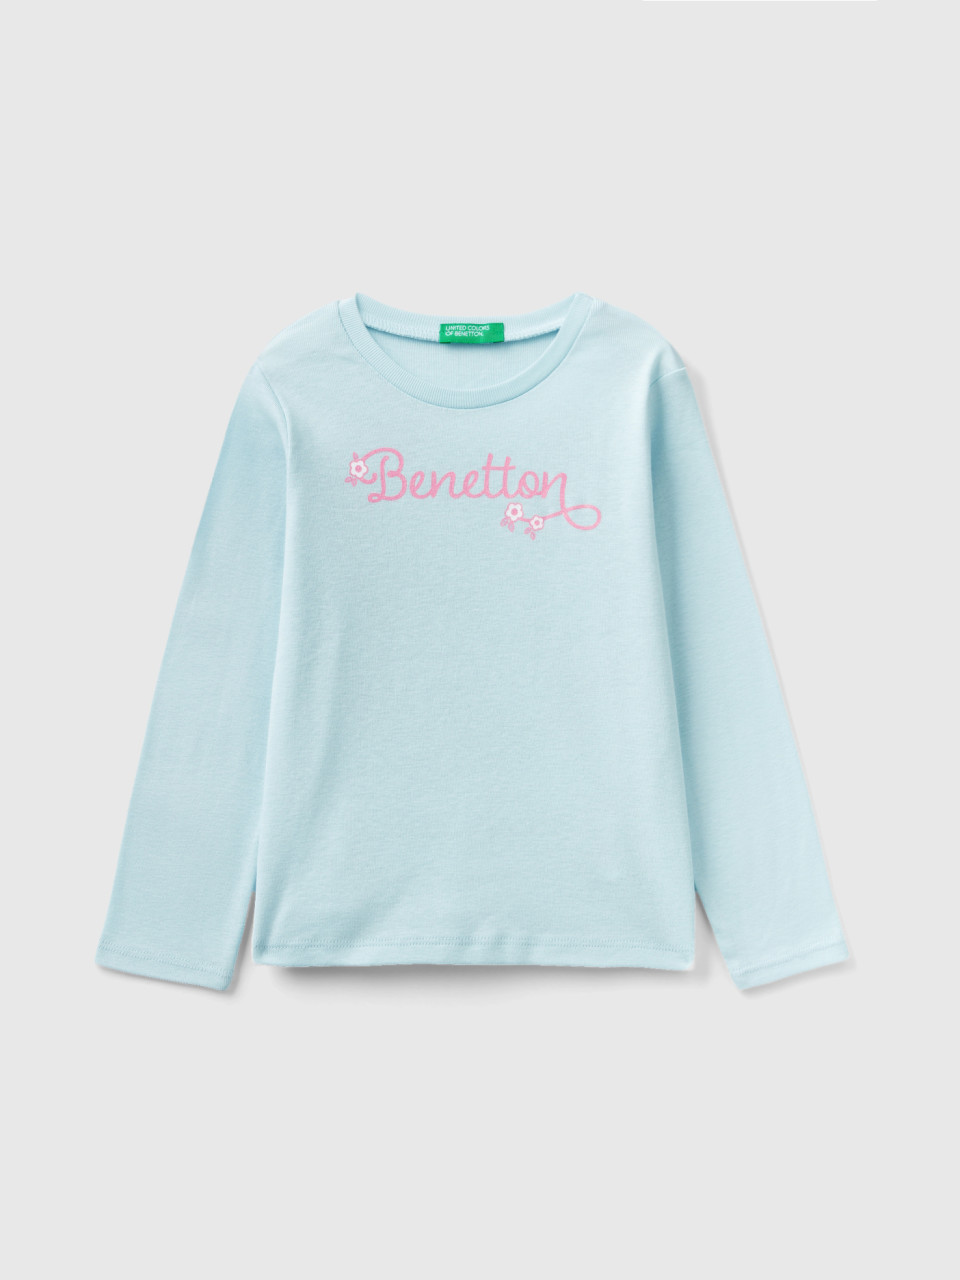 Benetton, Long Sleeve T-shirt With Glittery Print, Aqua, Kids